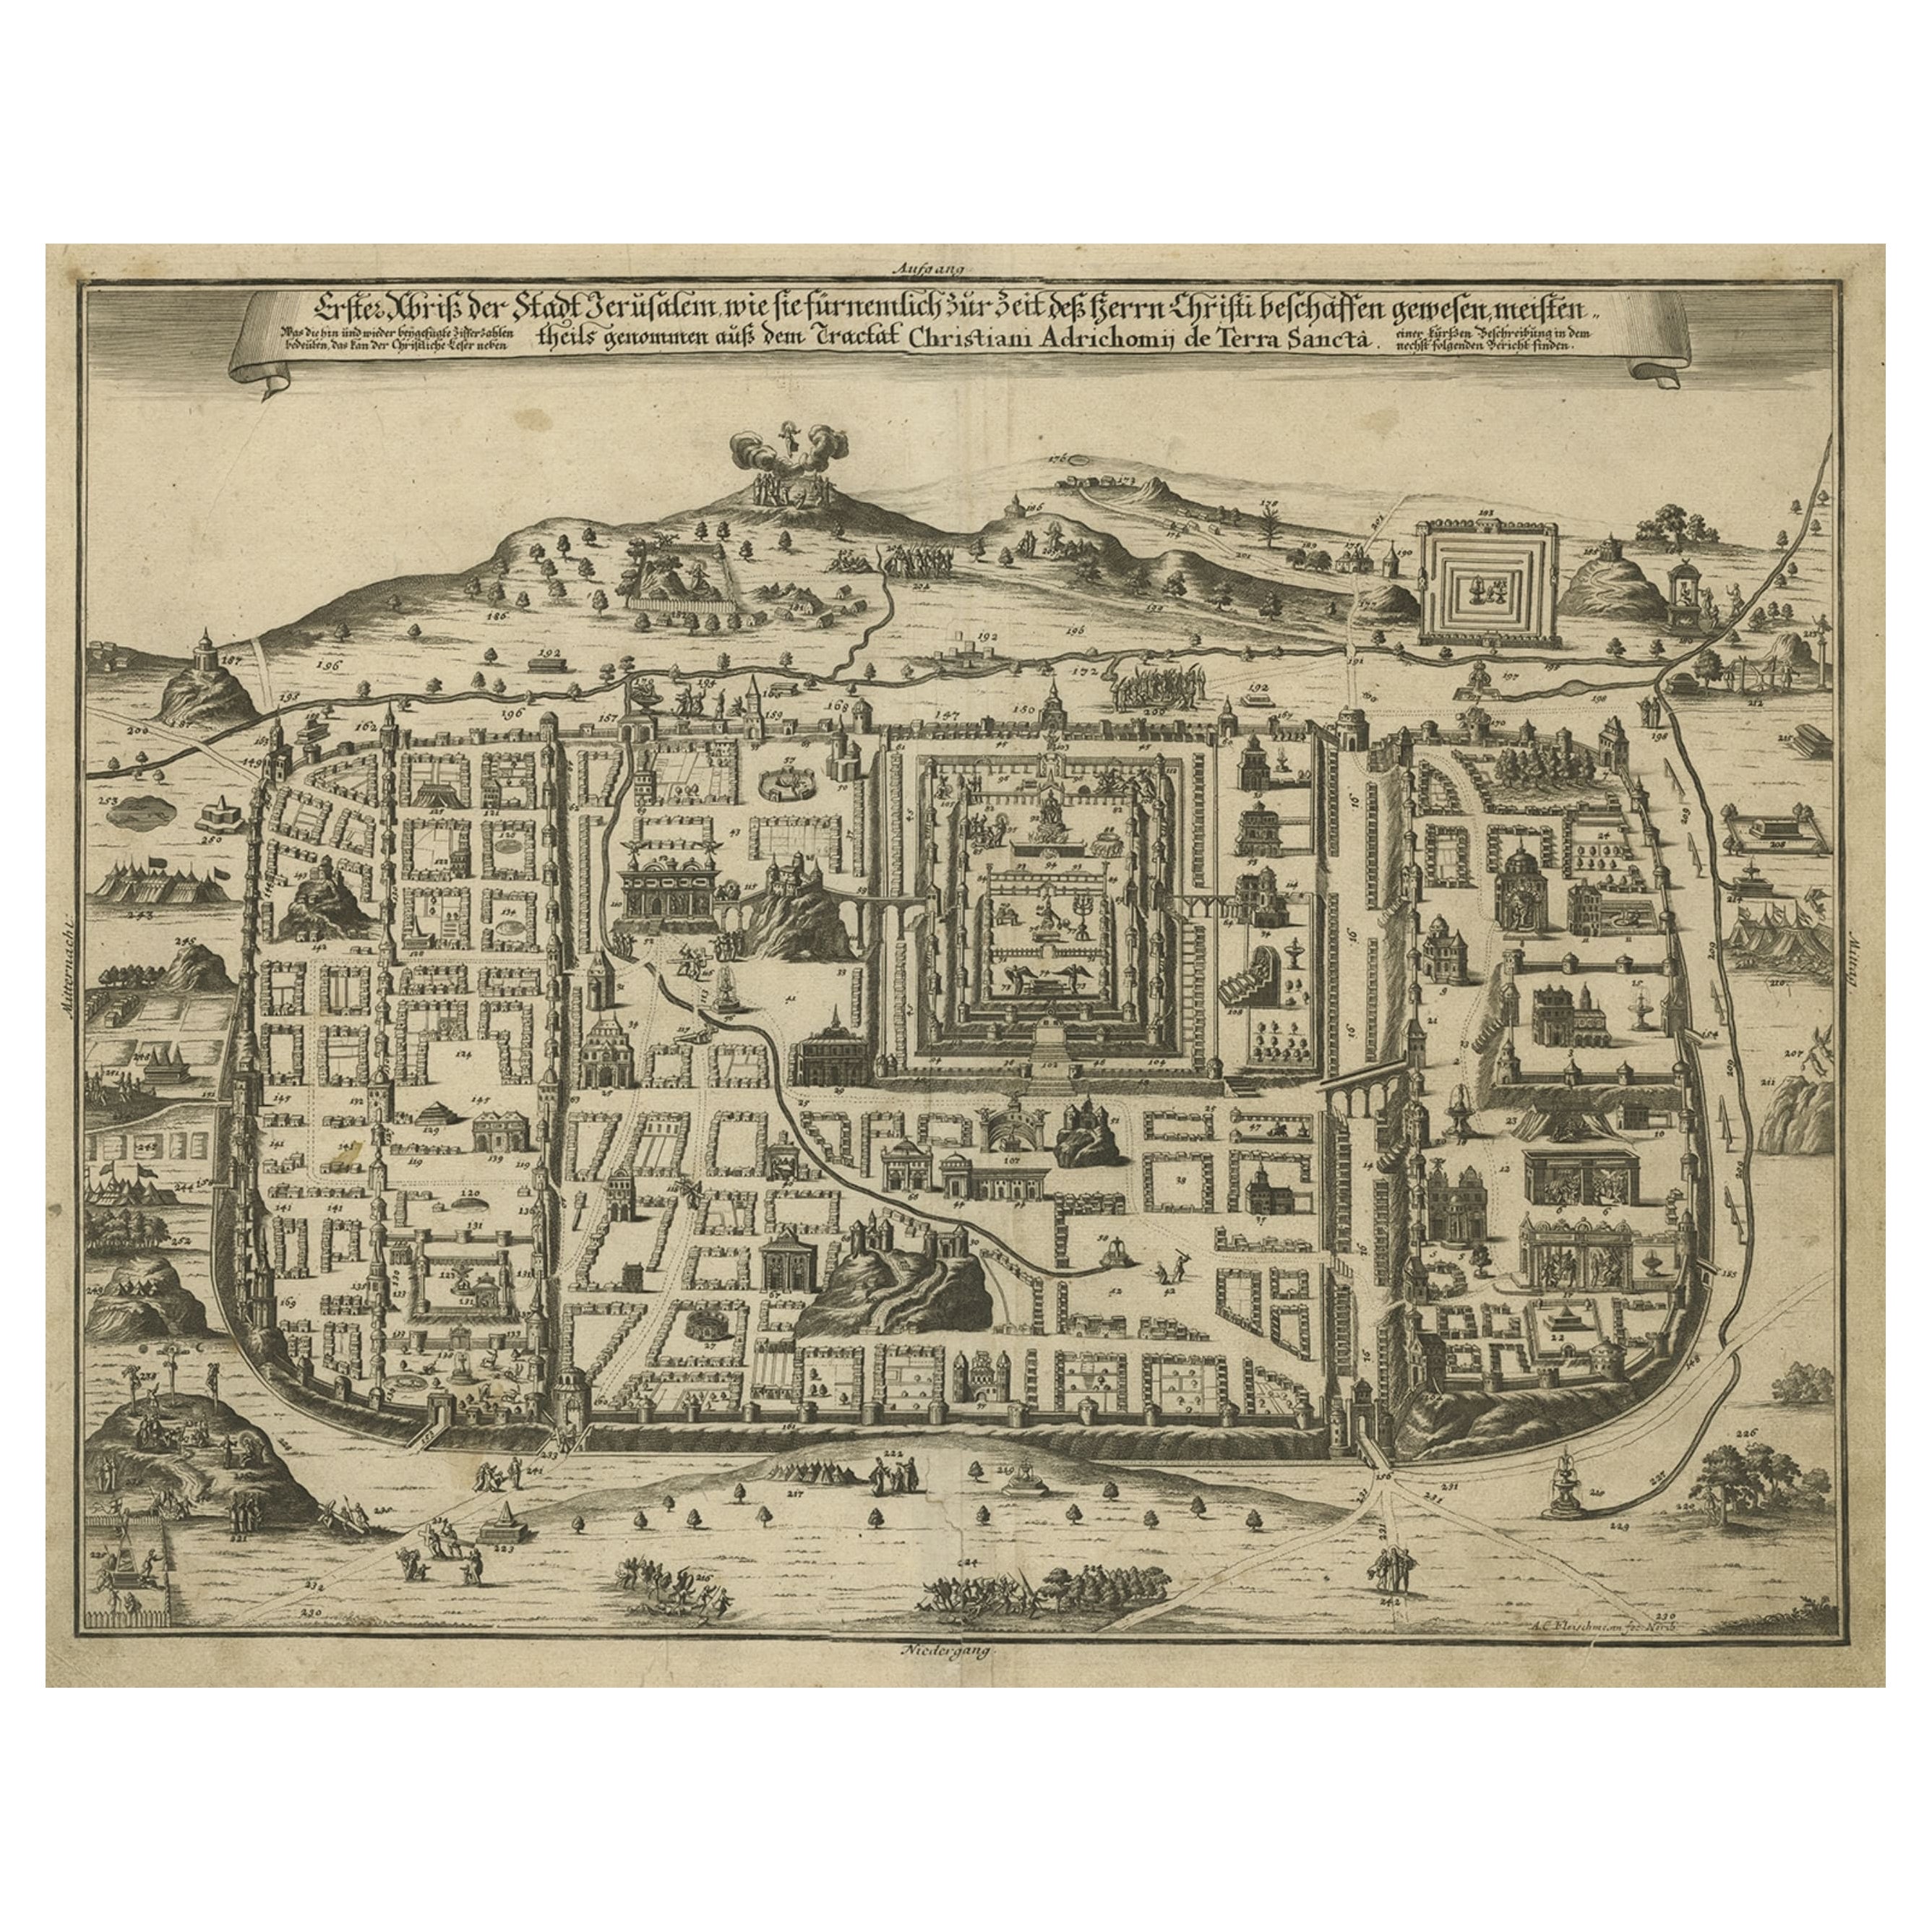 Spectacular Antique Original Engraving of a Town Plan of Jerusalem, 1708